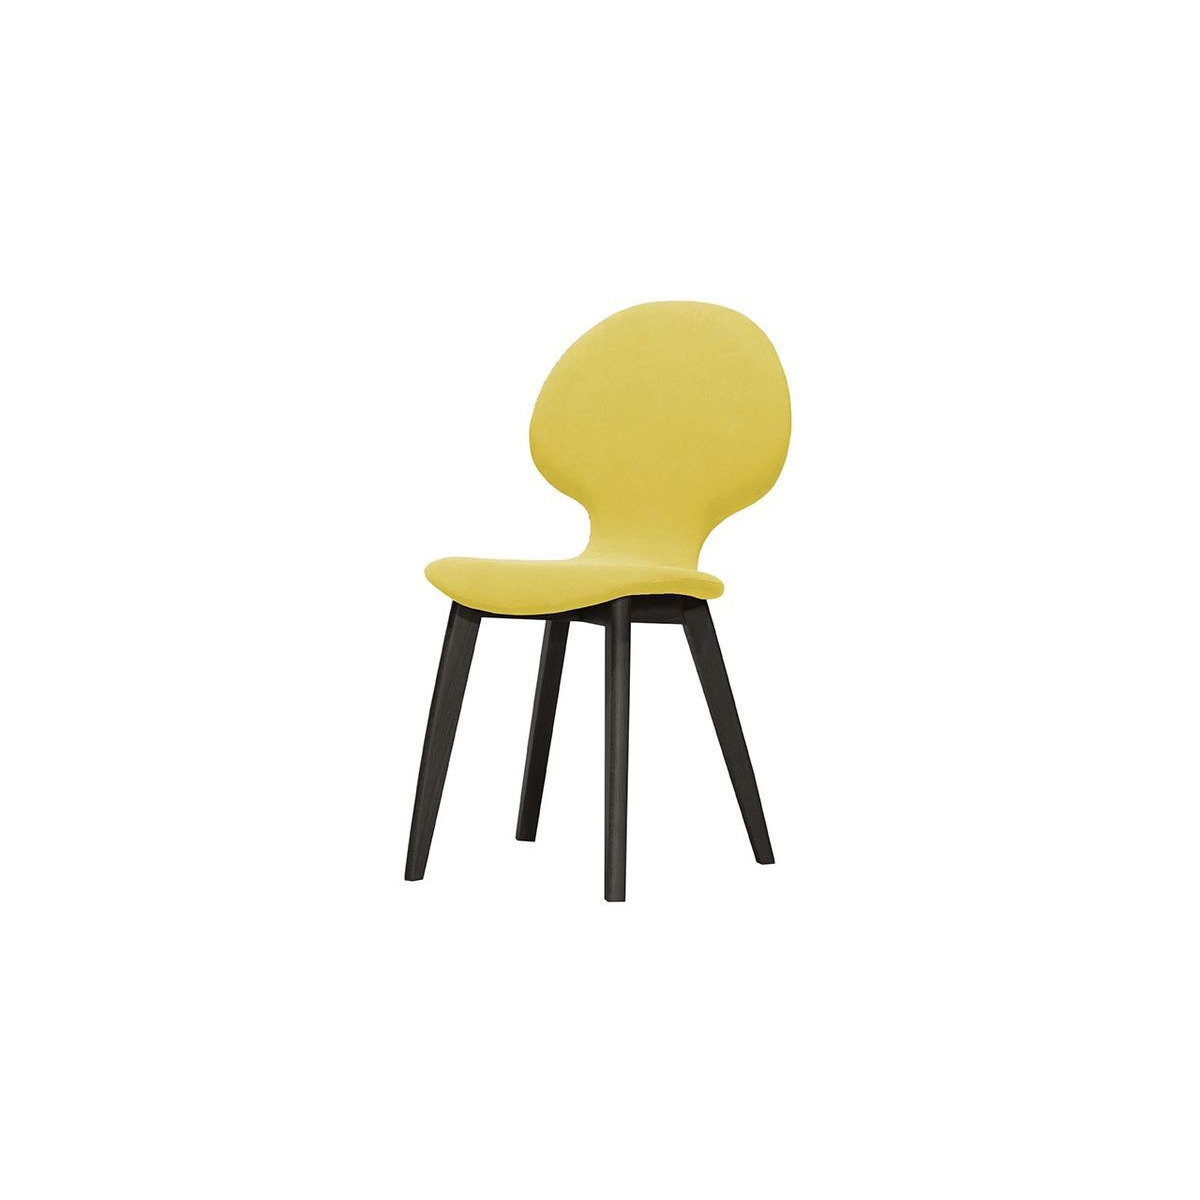 Mya Dining Chair, yellow, Leg colour: black - image 1